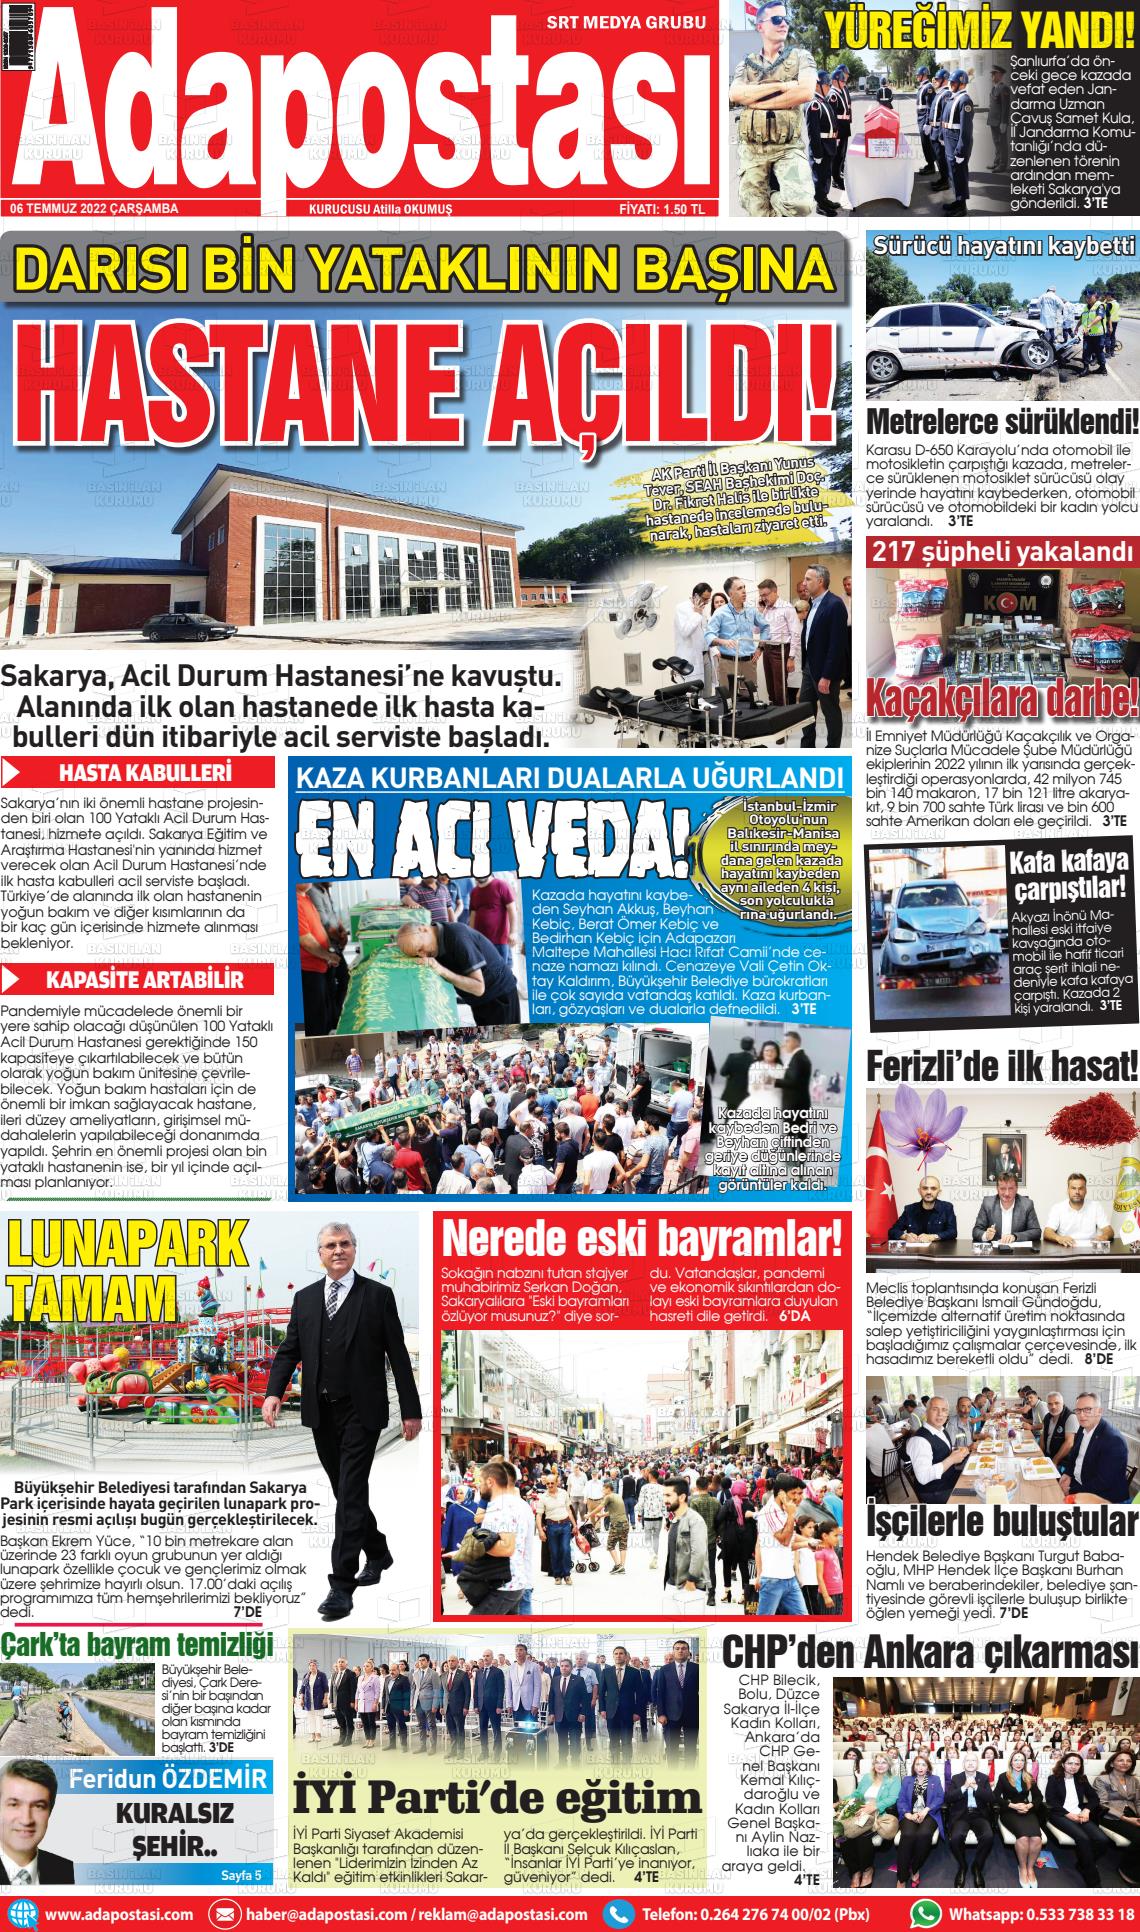 06 Temmuz 2022 Ada Postası Gazete Manşeti